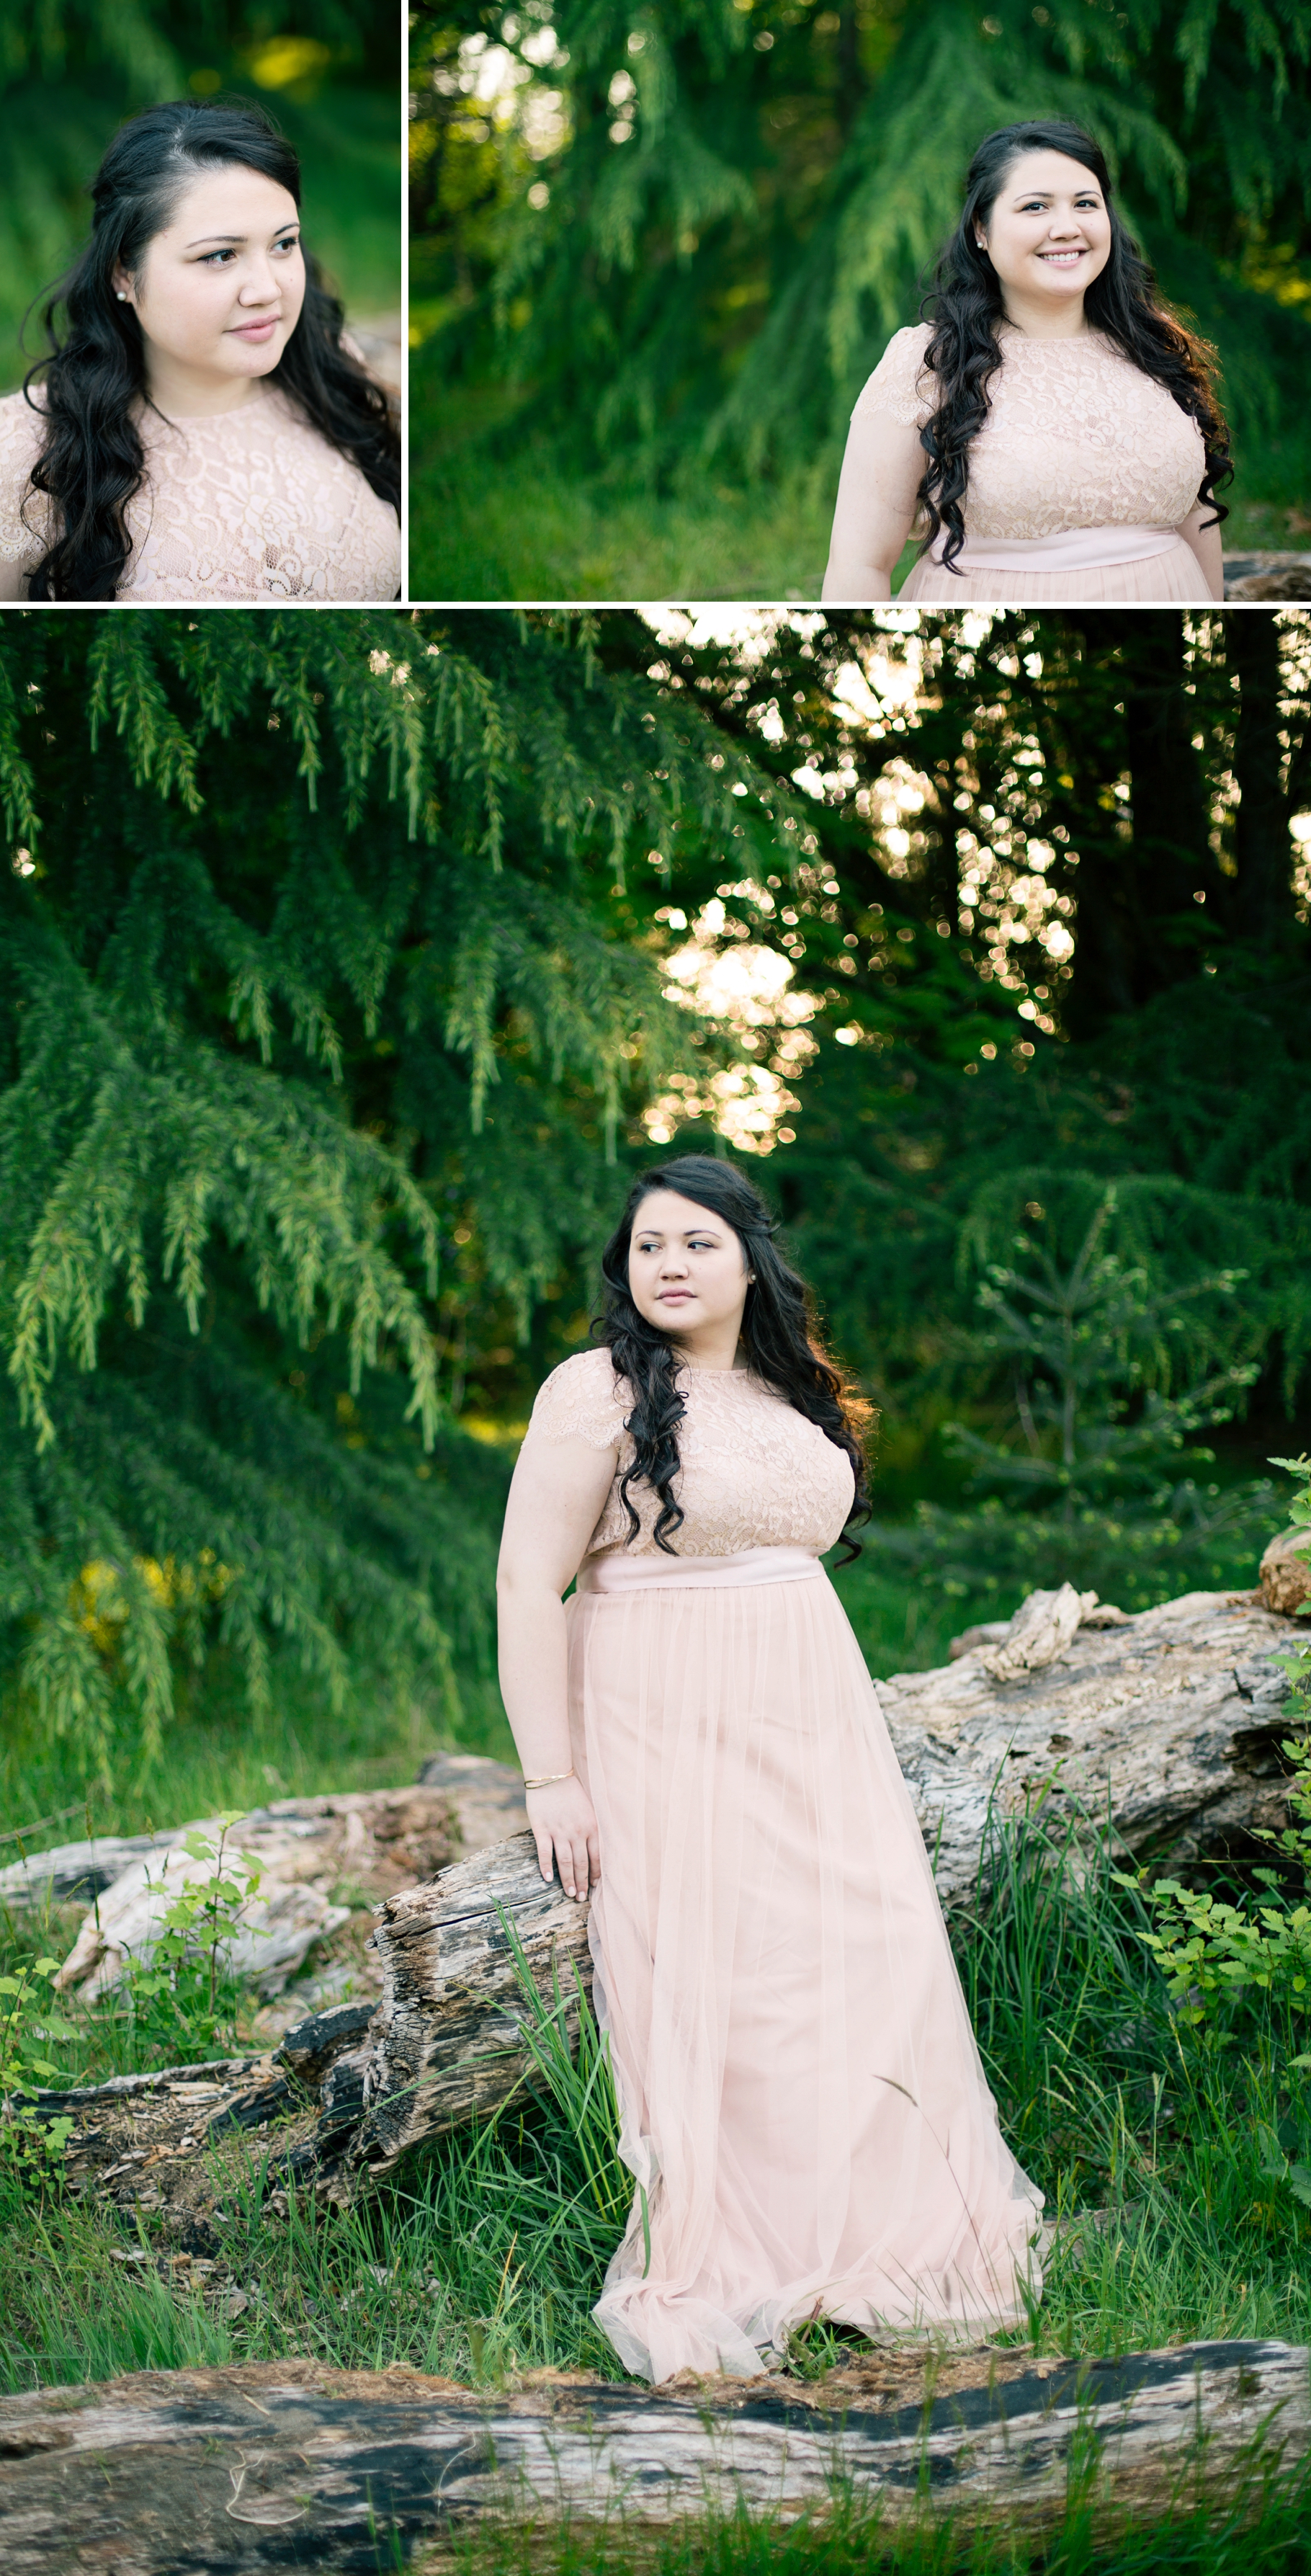 24-Bridal-Portraits-Bride-Discovery-Park-Woodland-Sunset-Elopement-Seattle-Photographer-Wedding-Photography-by-Betty-Elaine-Blush-BHLDN-Wedding-Gown-Dress